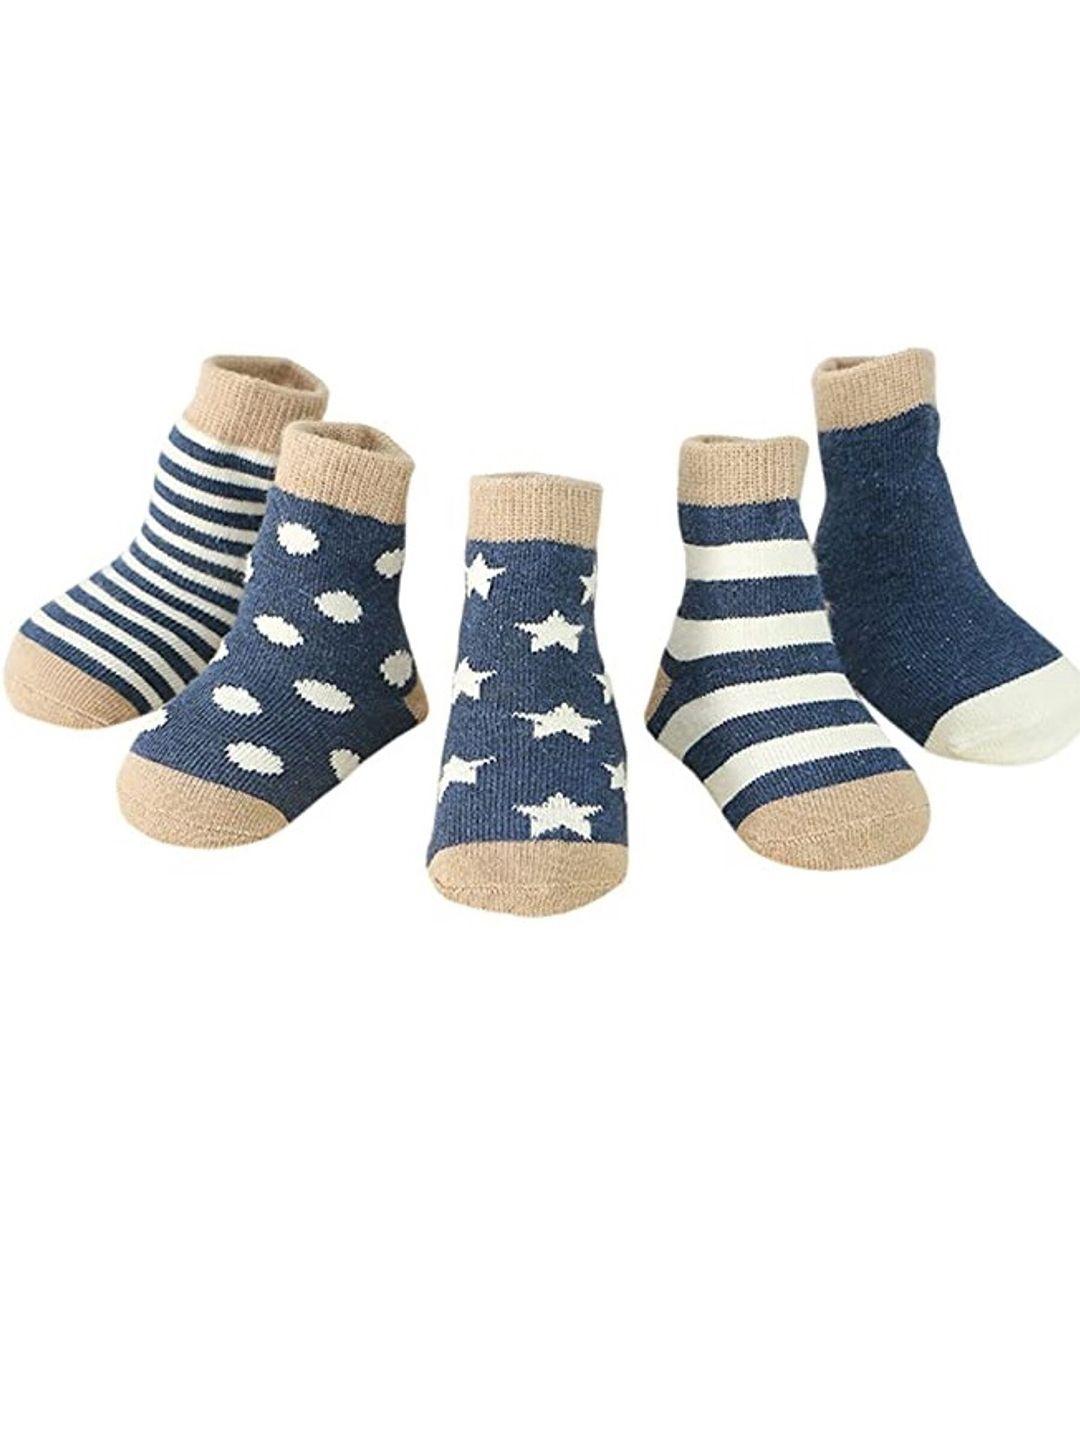 el regalo kids pack of 5 self-designed calf-length socks